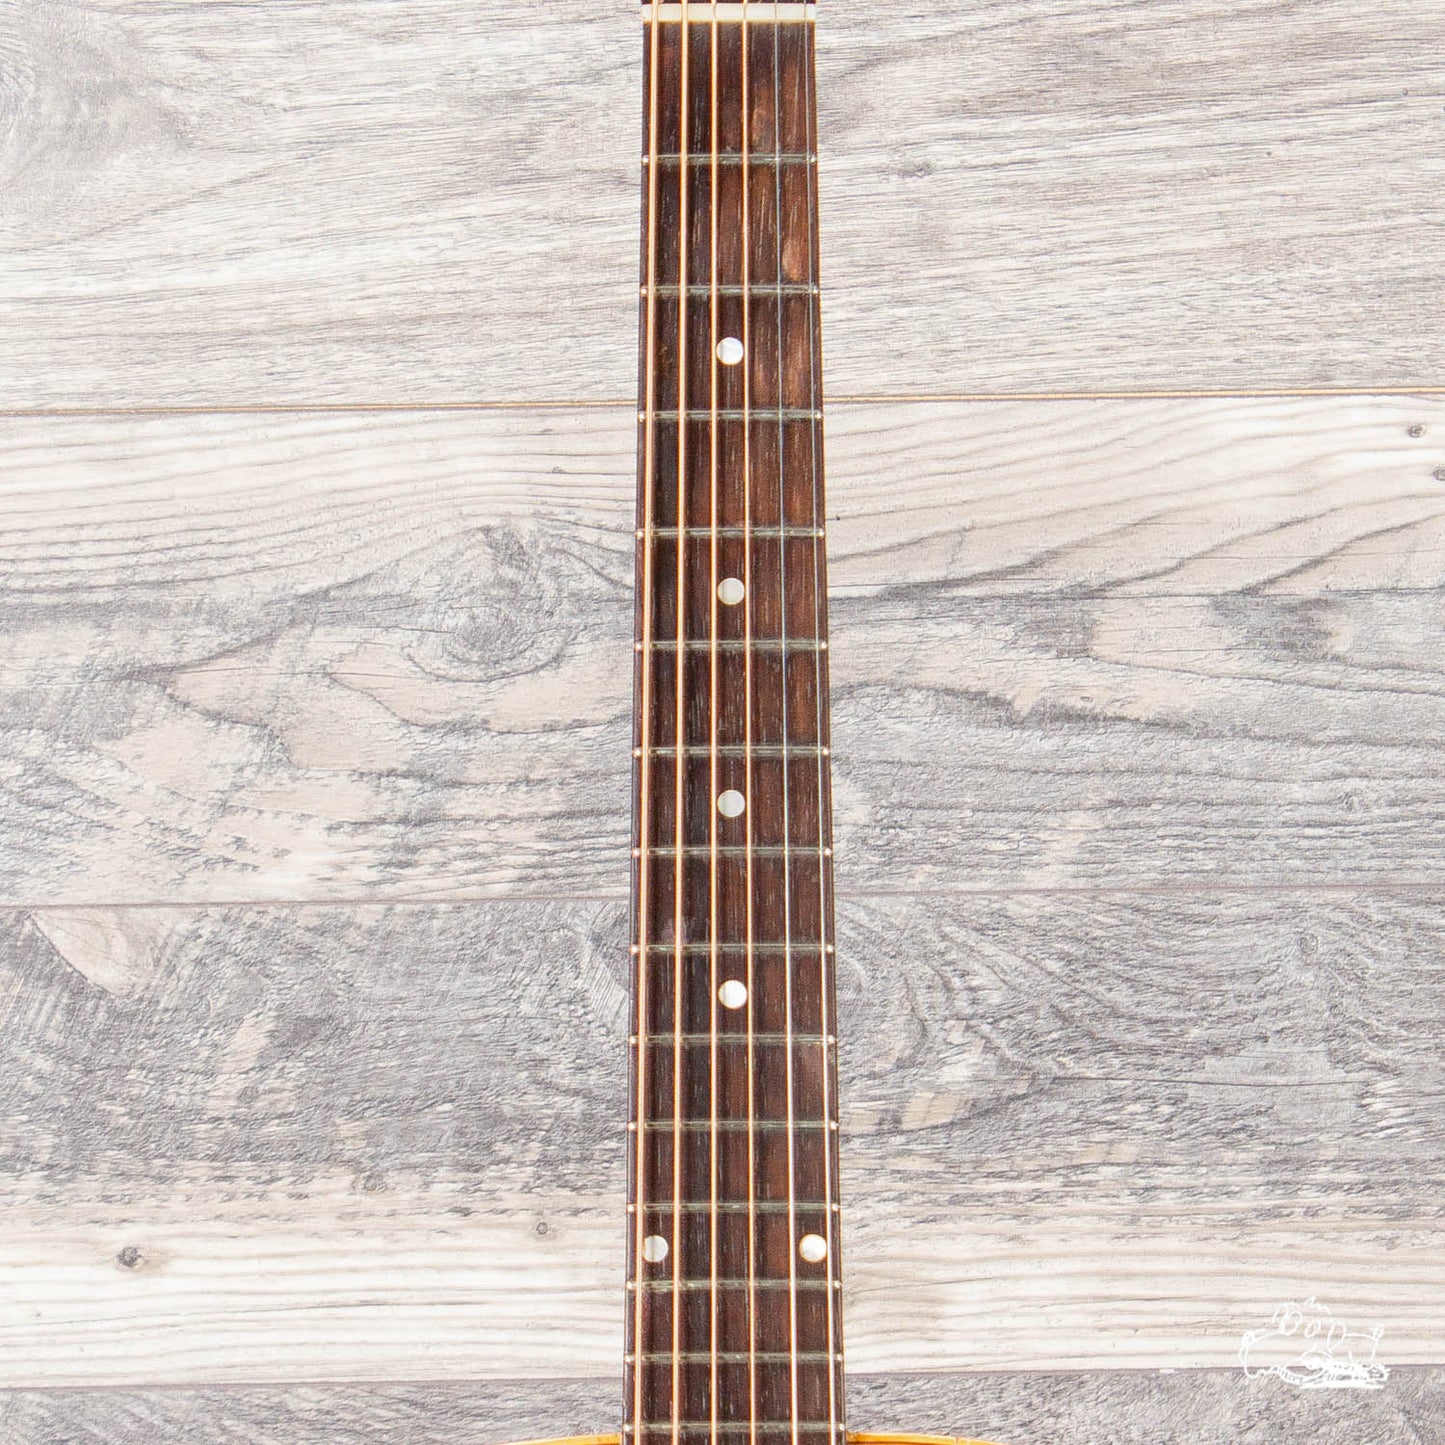 1953 Gibson J-50